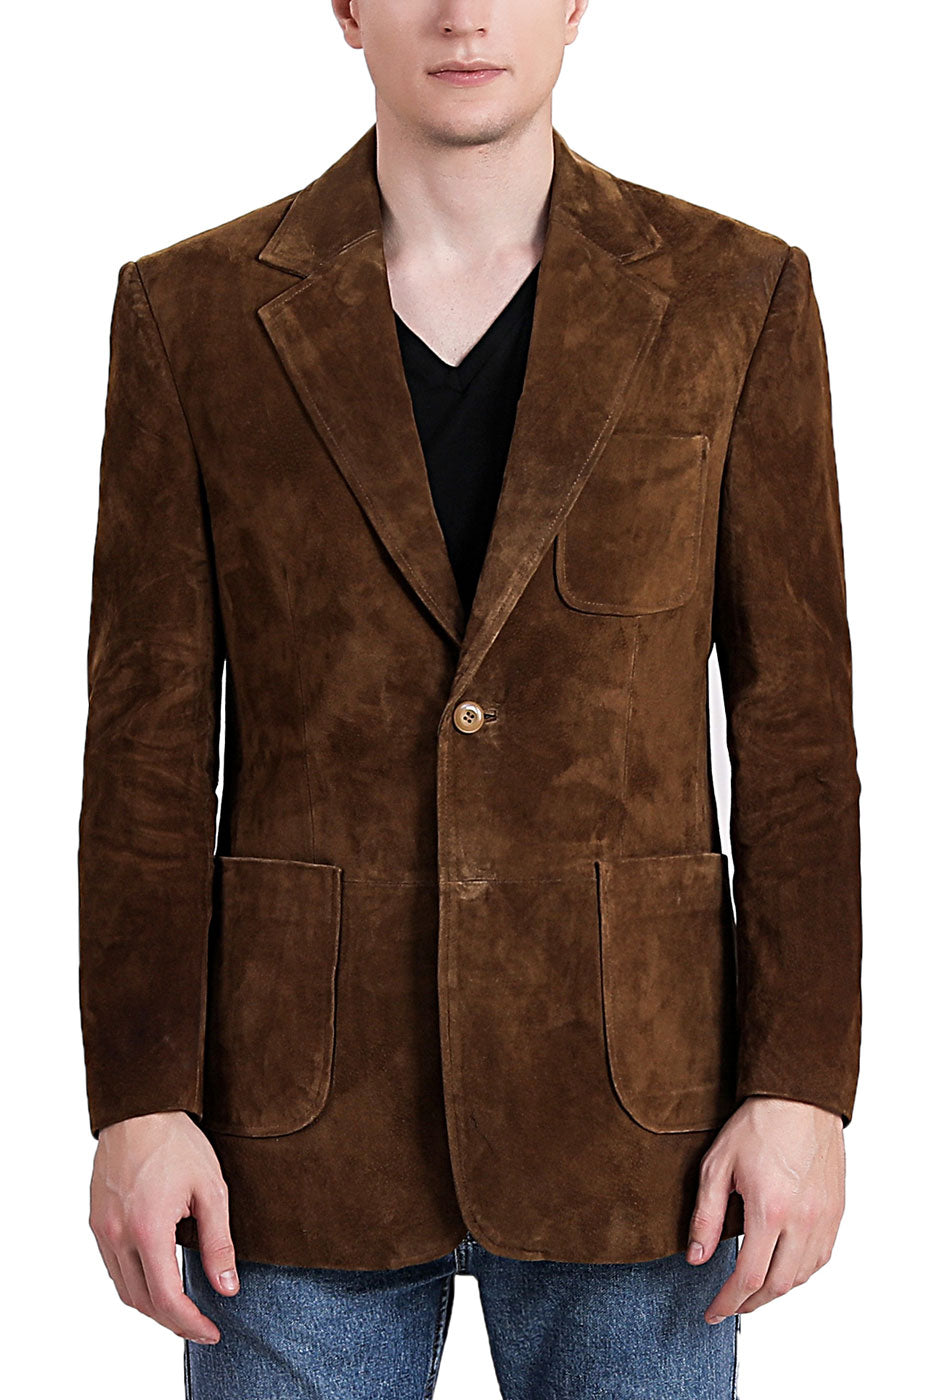 Men Suede Leather Blazer Soft High Quality Genuine Lambskin Jacket Coat |  eBay